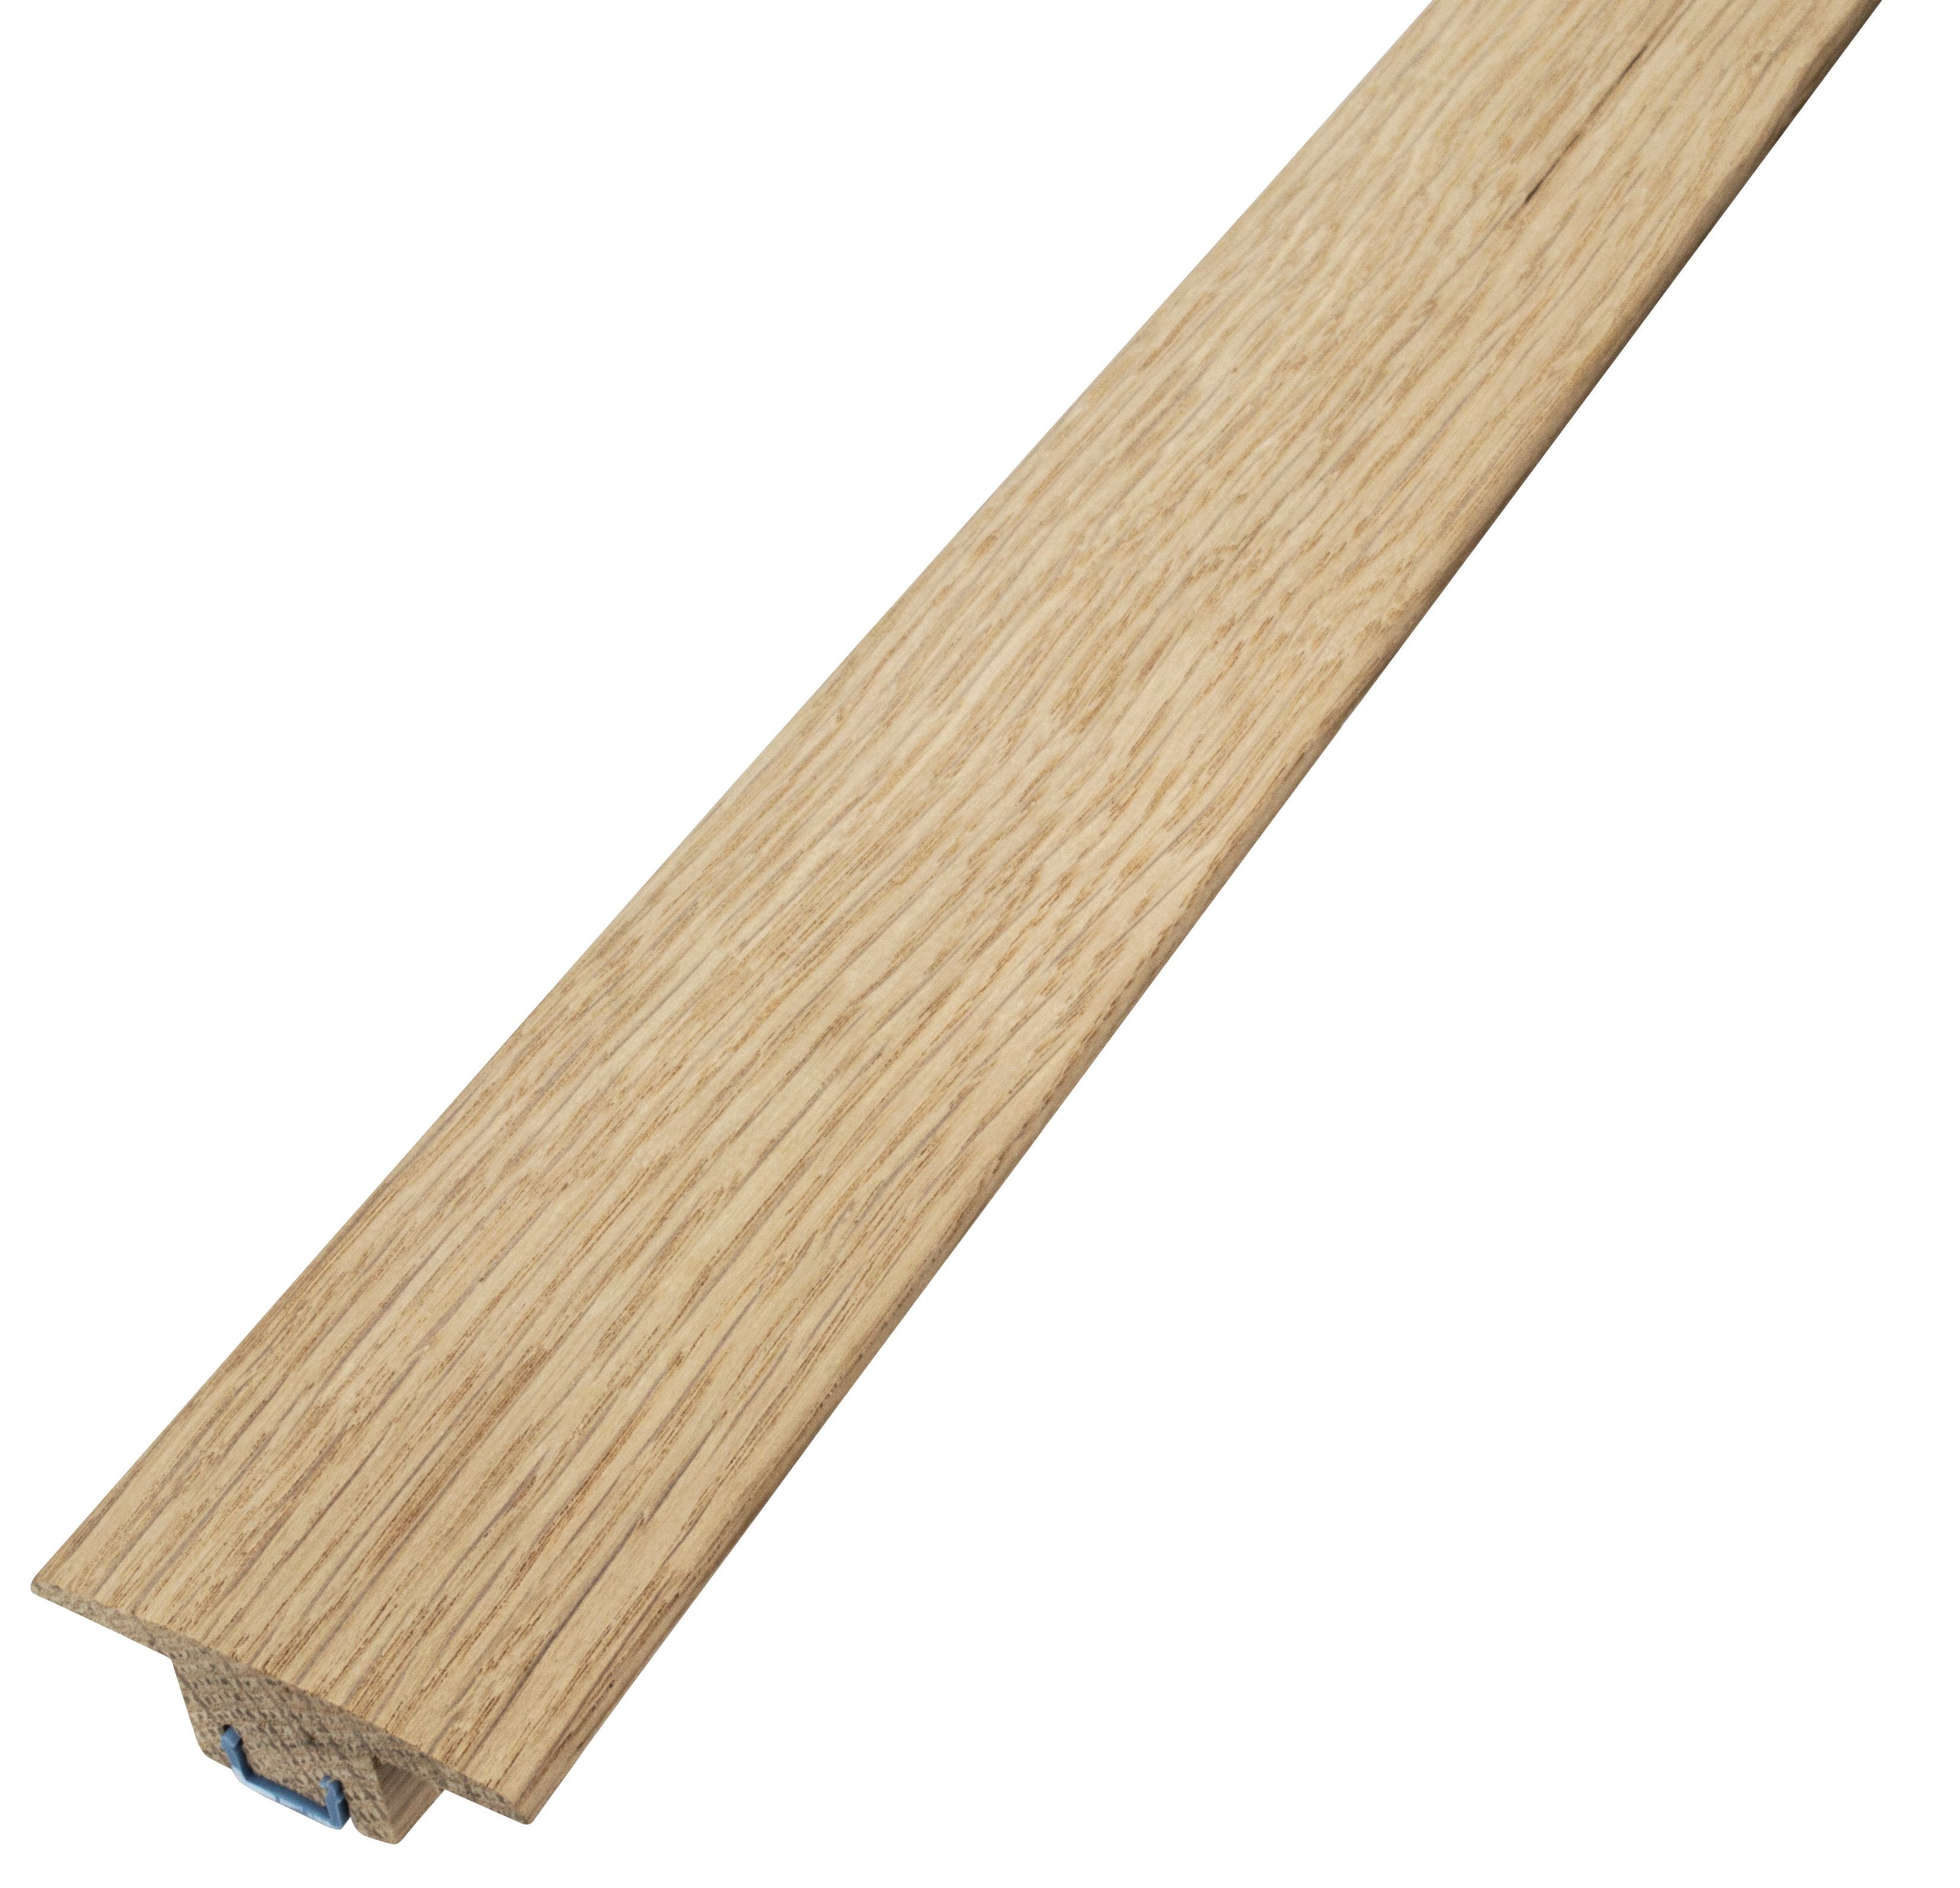 Solid Oak Threshold Bar - 900mm